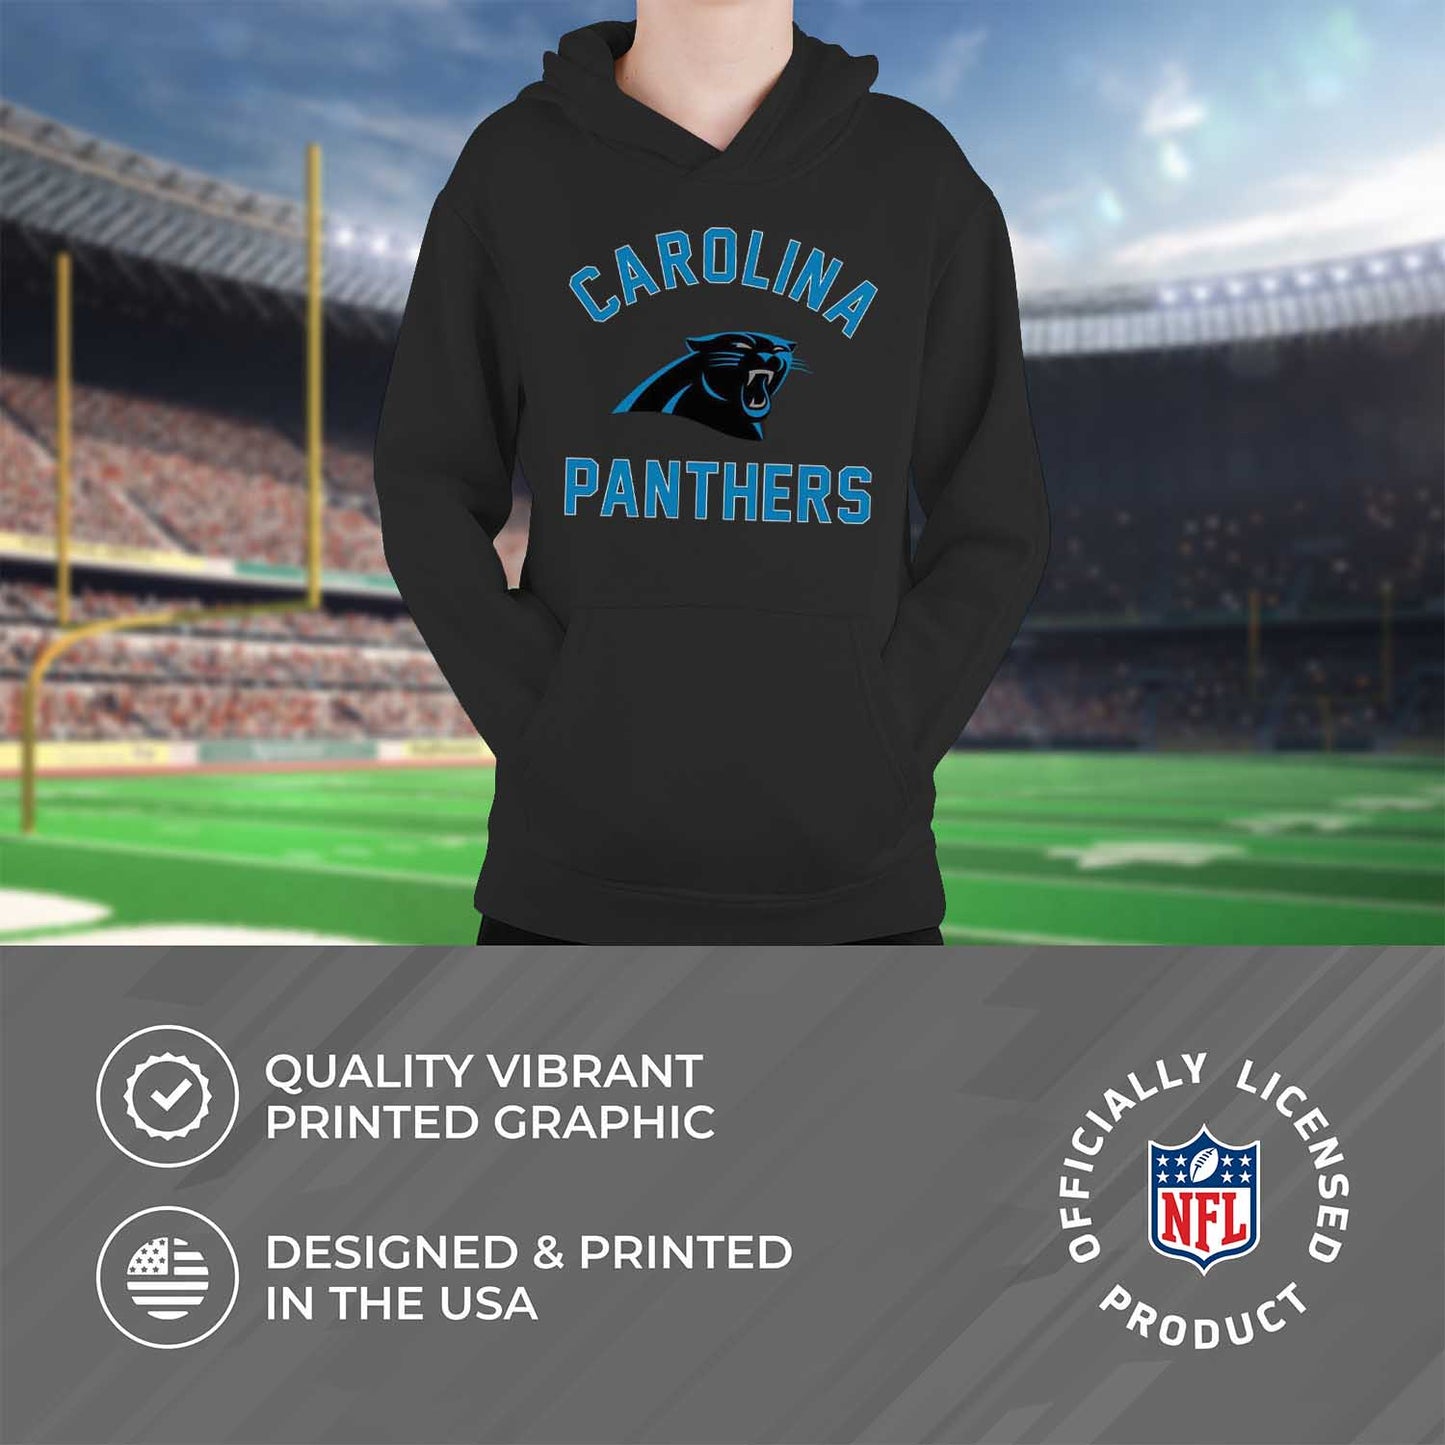 Carolina Panthers NFL Youth Gameday Hooded Sweatshirt - Black